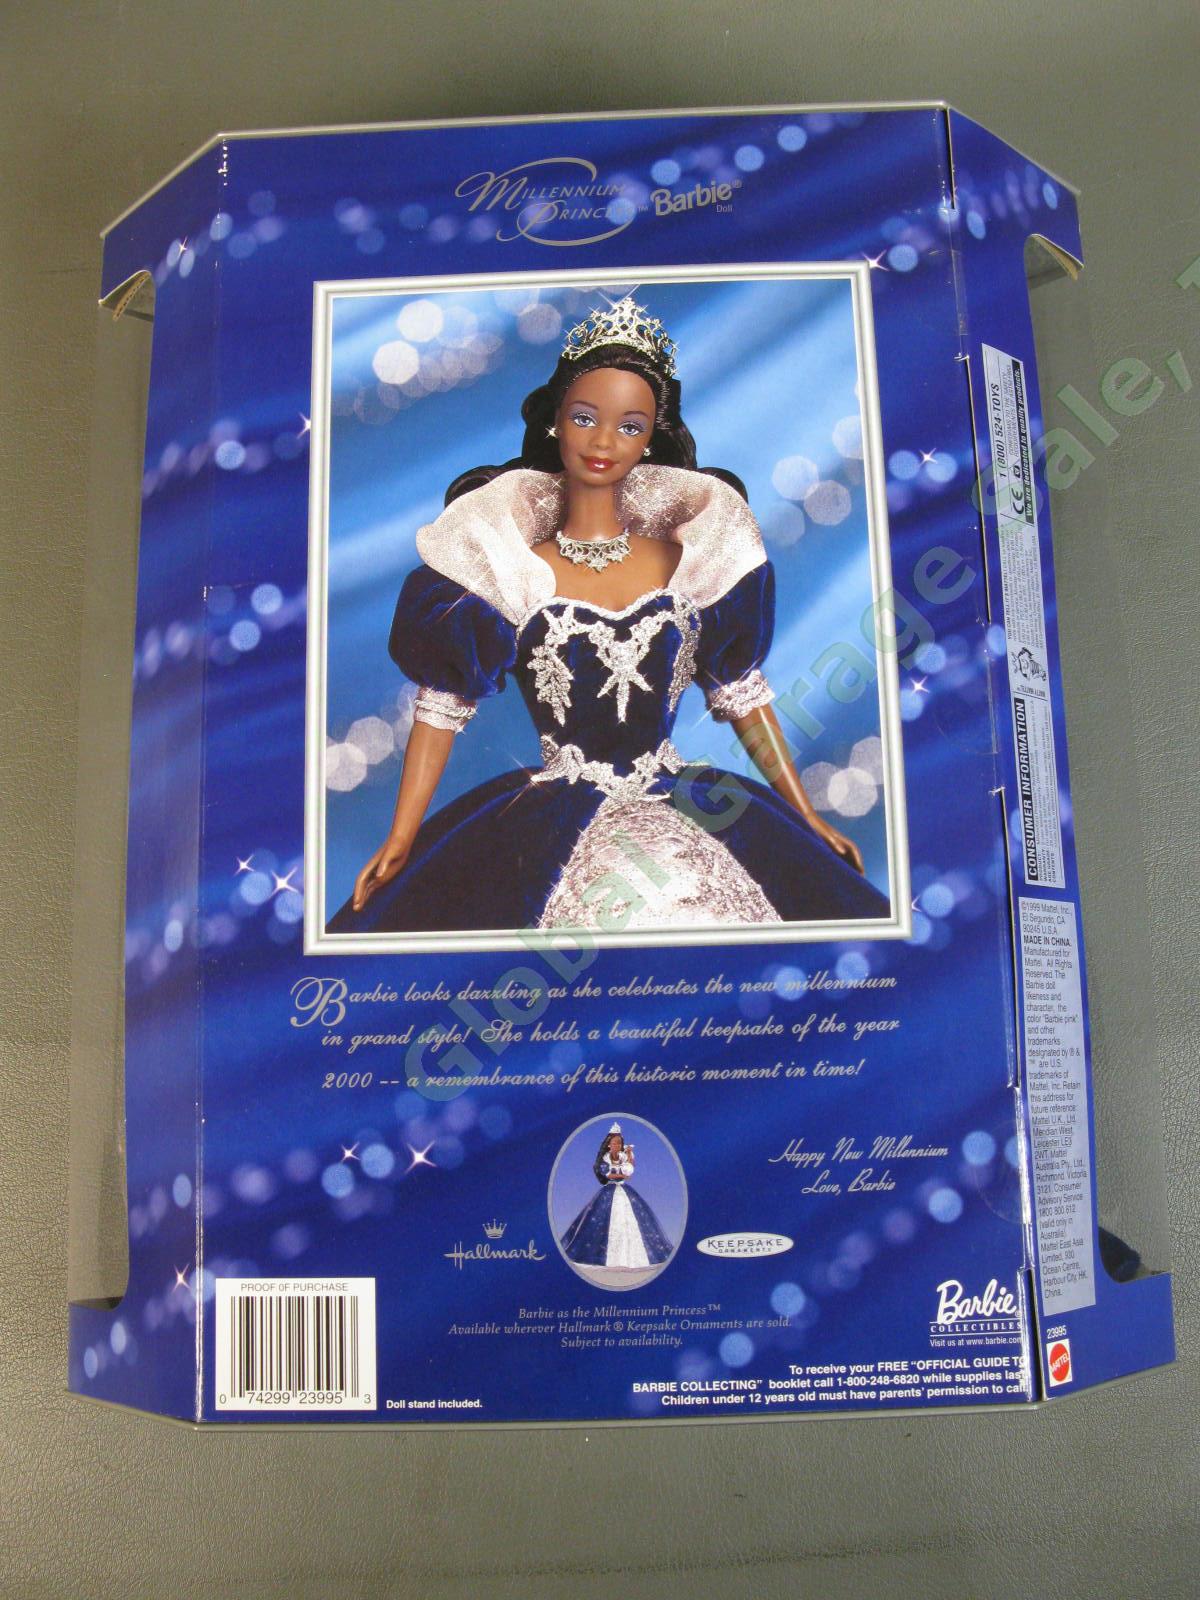 1999 2000 Millennium Princess 23995 Celebration Barbie Doll 28269 New Years SET 3